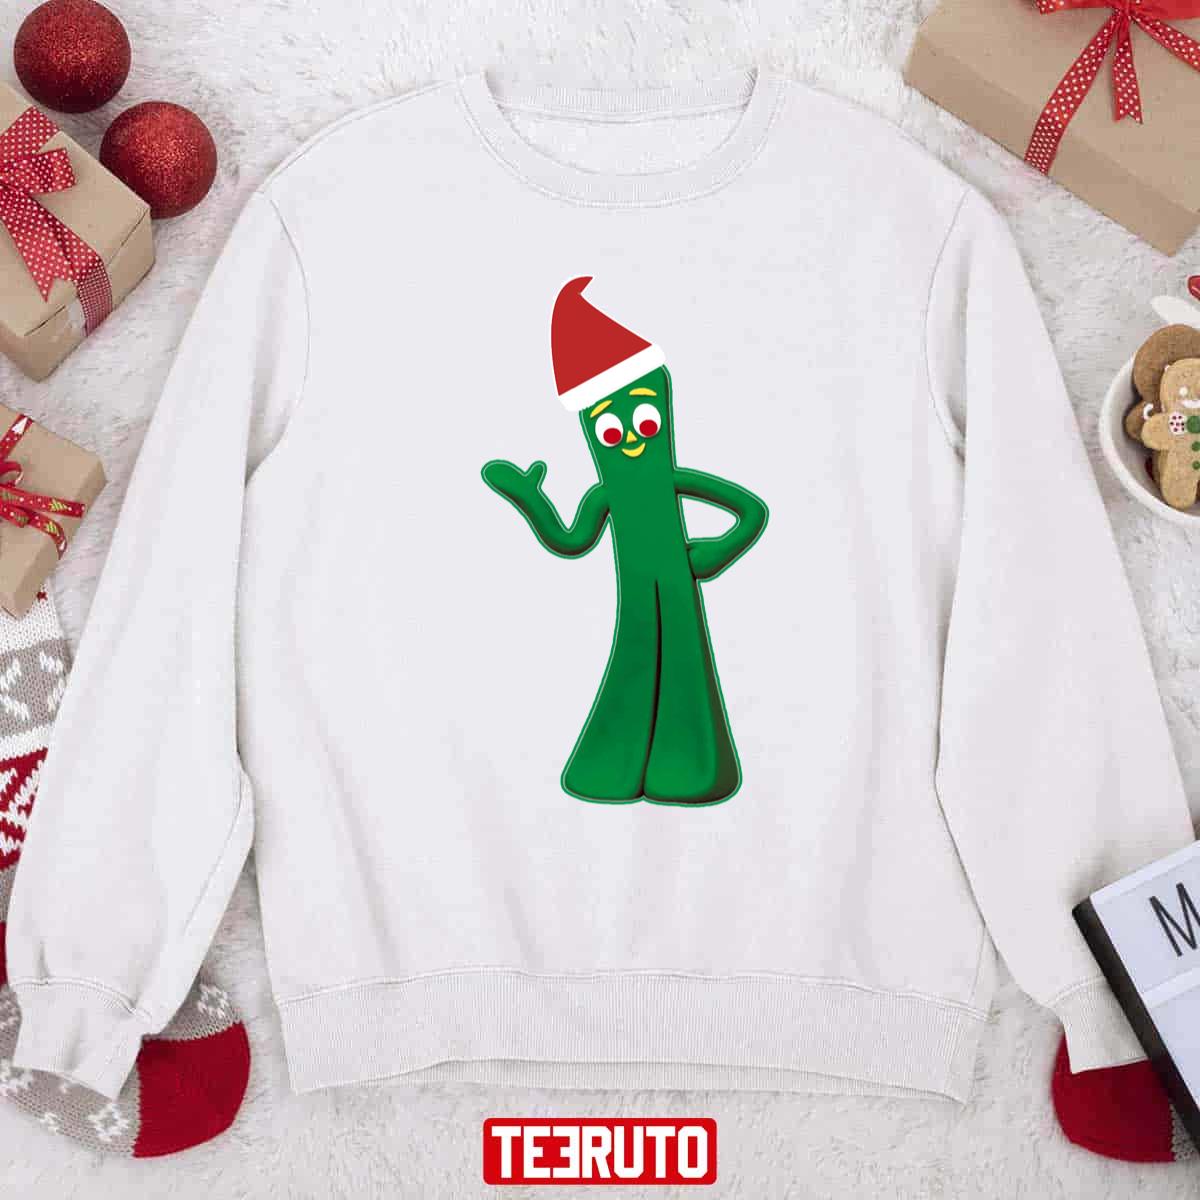 Gumbyy's Santa Hat Christmas Unisex Sweatshirt